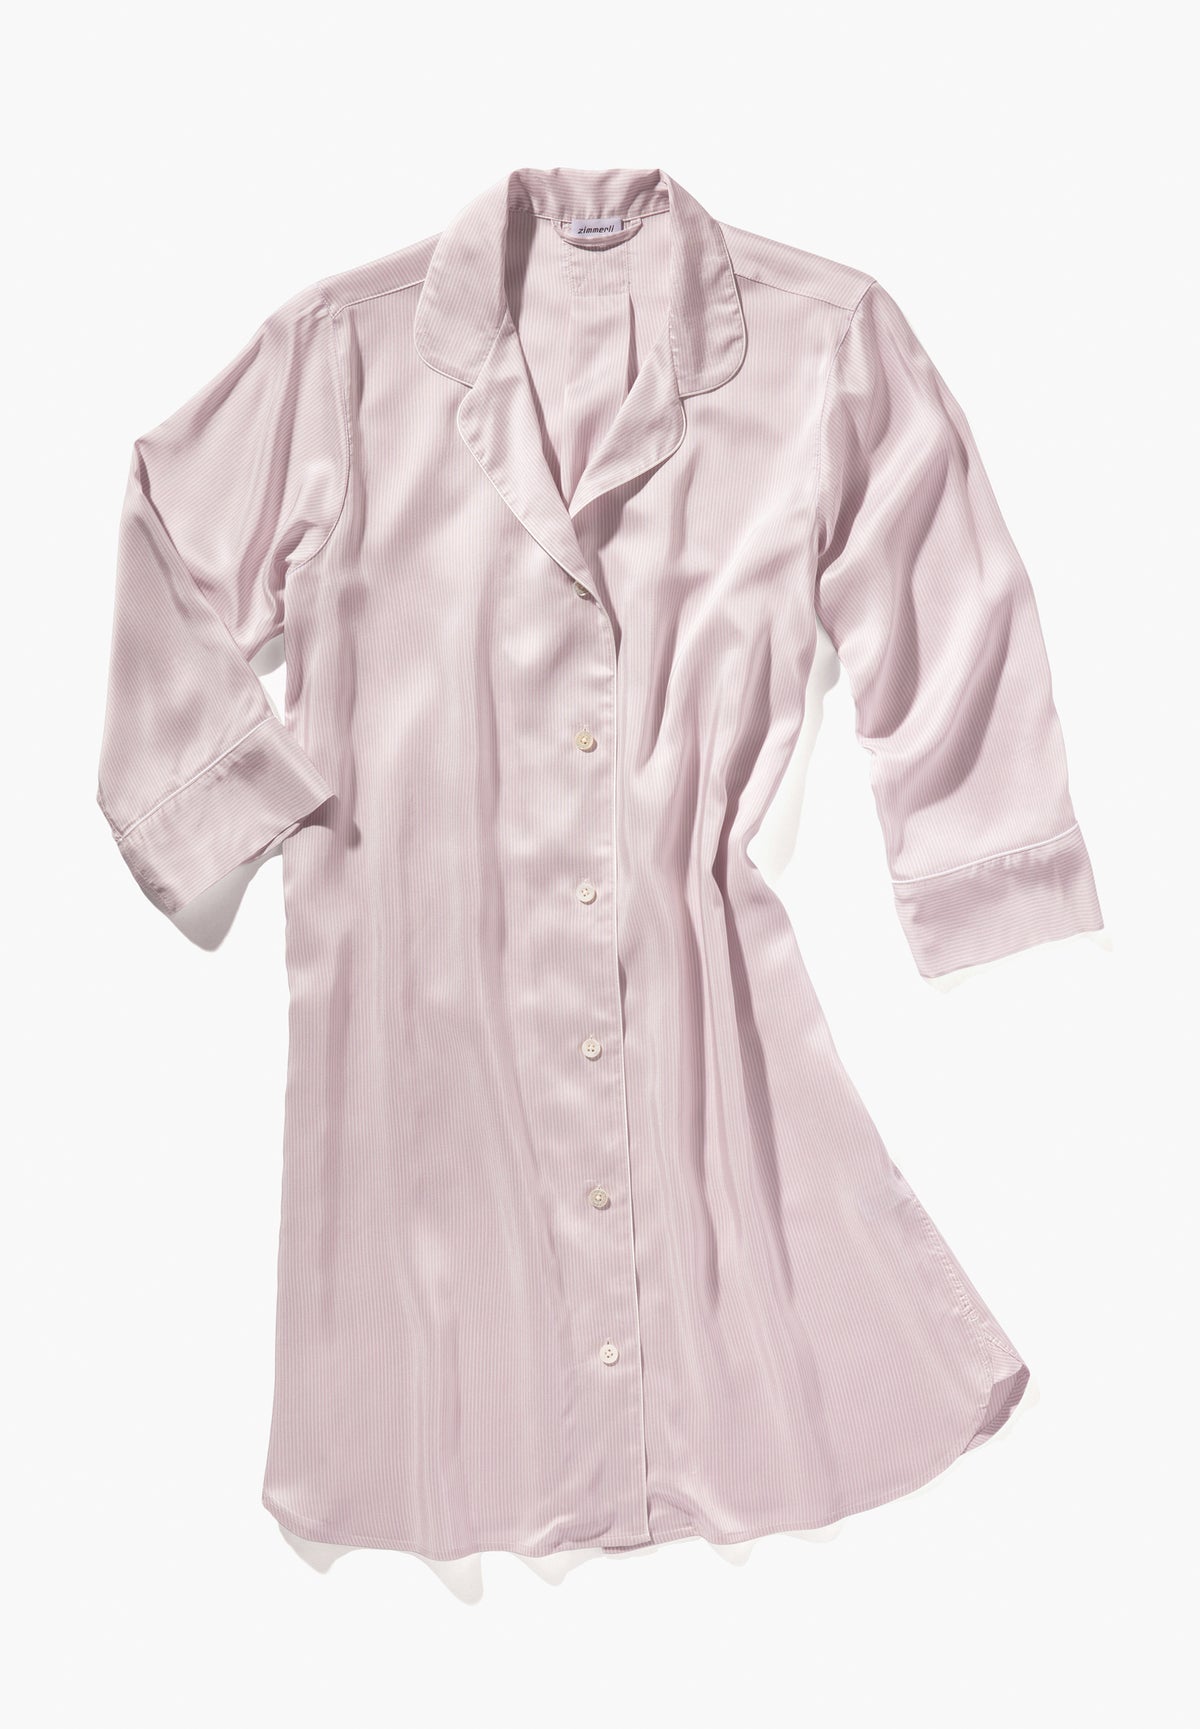 Feminine Stripes | Tee-shirt de nuit manches 3/4 - lilac stripes